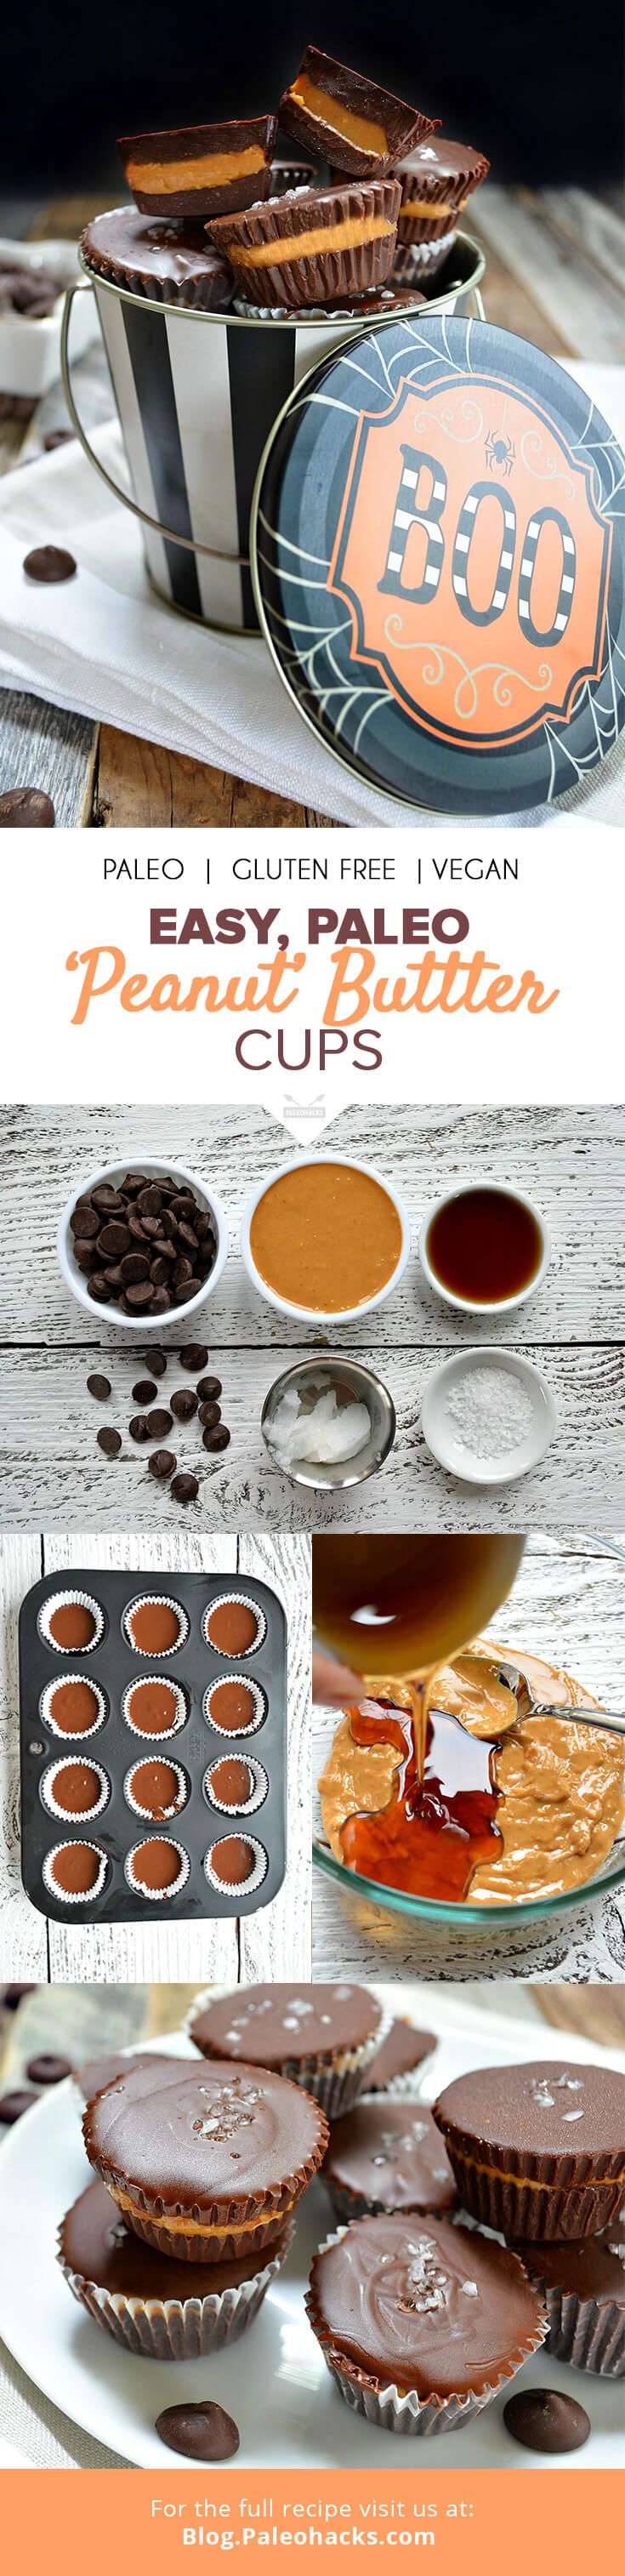 paleo peanut butter cups pin